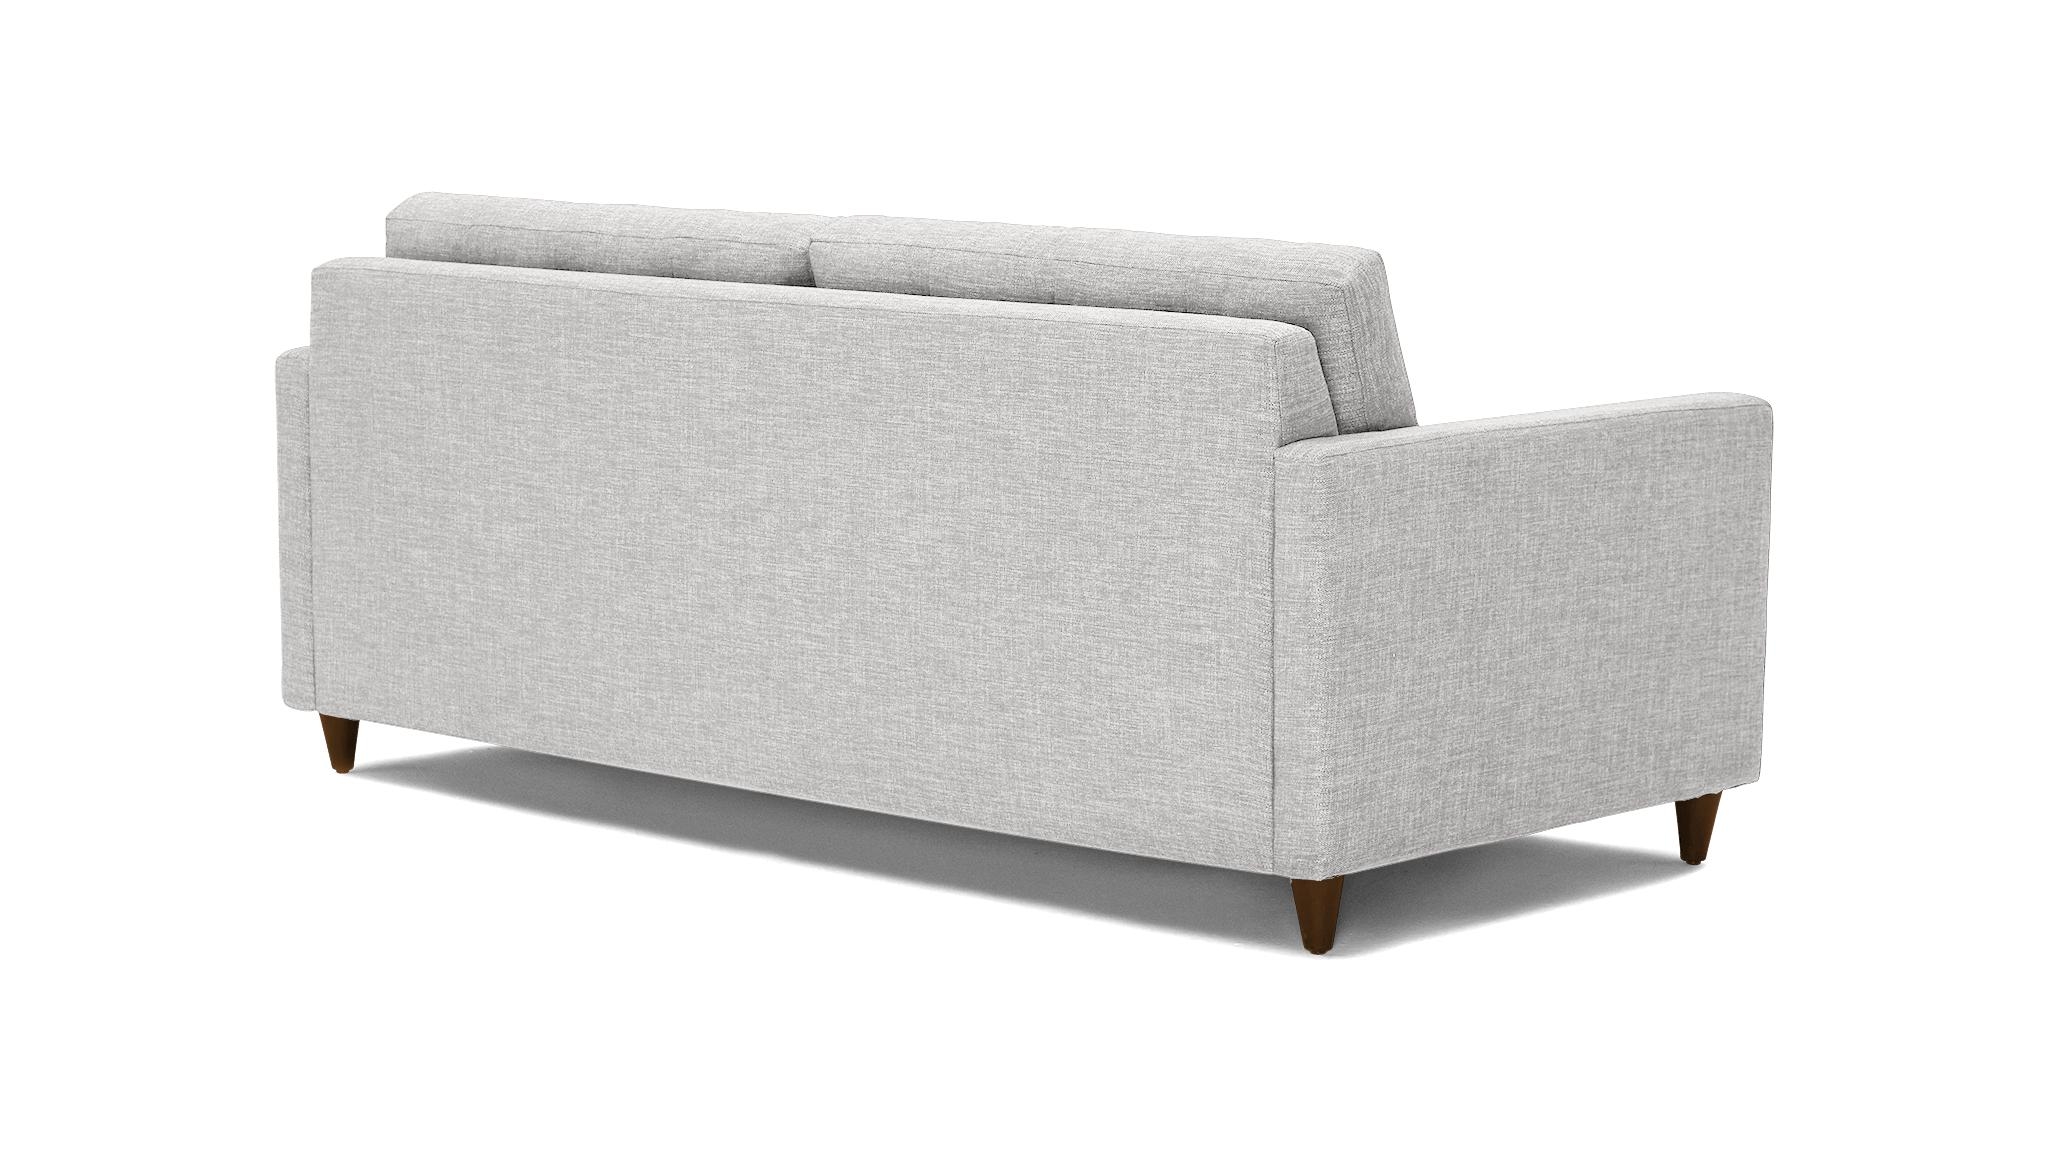 Gray Eliot Mid Century Modern Sleeper Sofa - Sunbrella Premier Fog - Mocha - Foam - Image 3